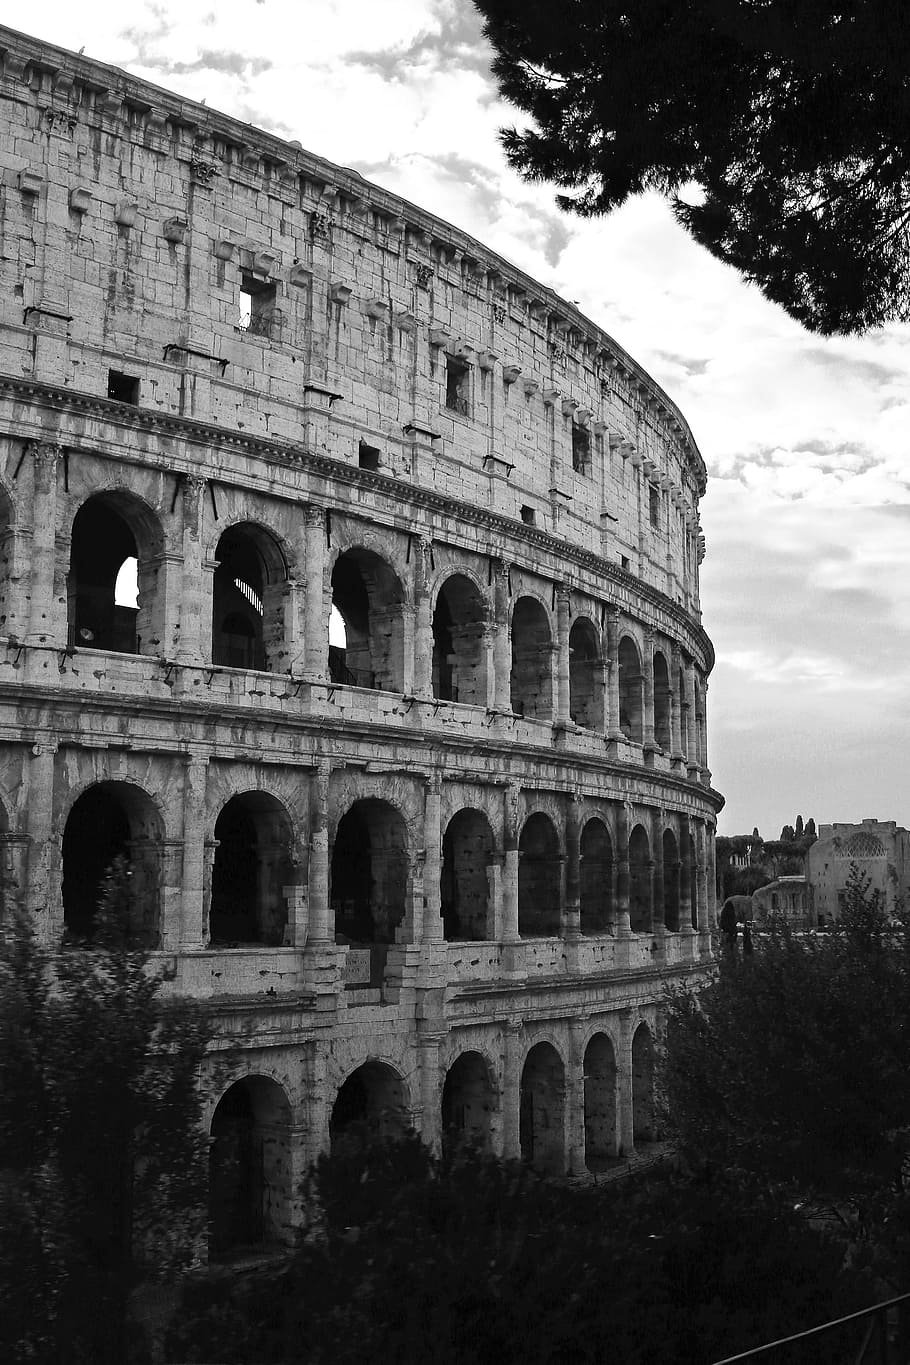 estadio en escala de grises, árboles, coliseo, italia, roma, europa, romano, italiano, hito, arquitectura